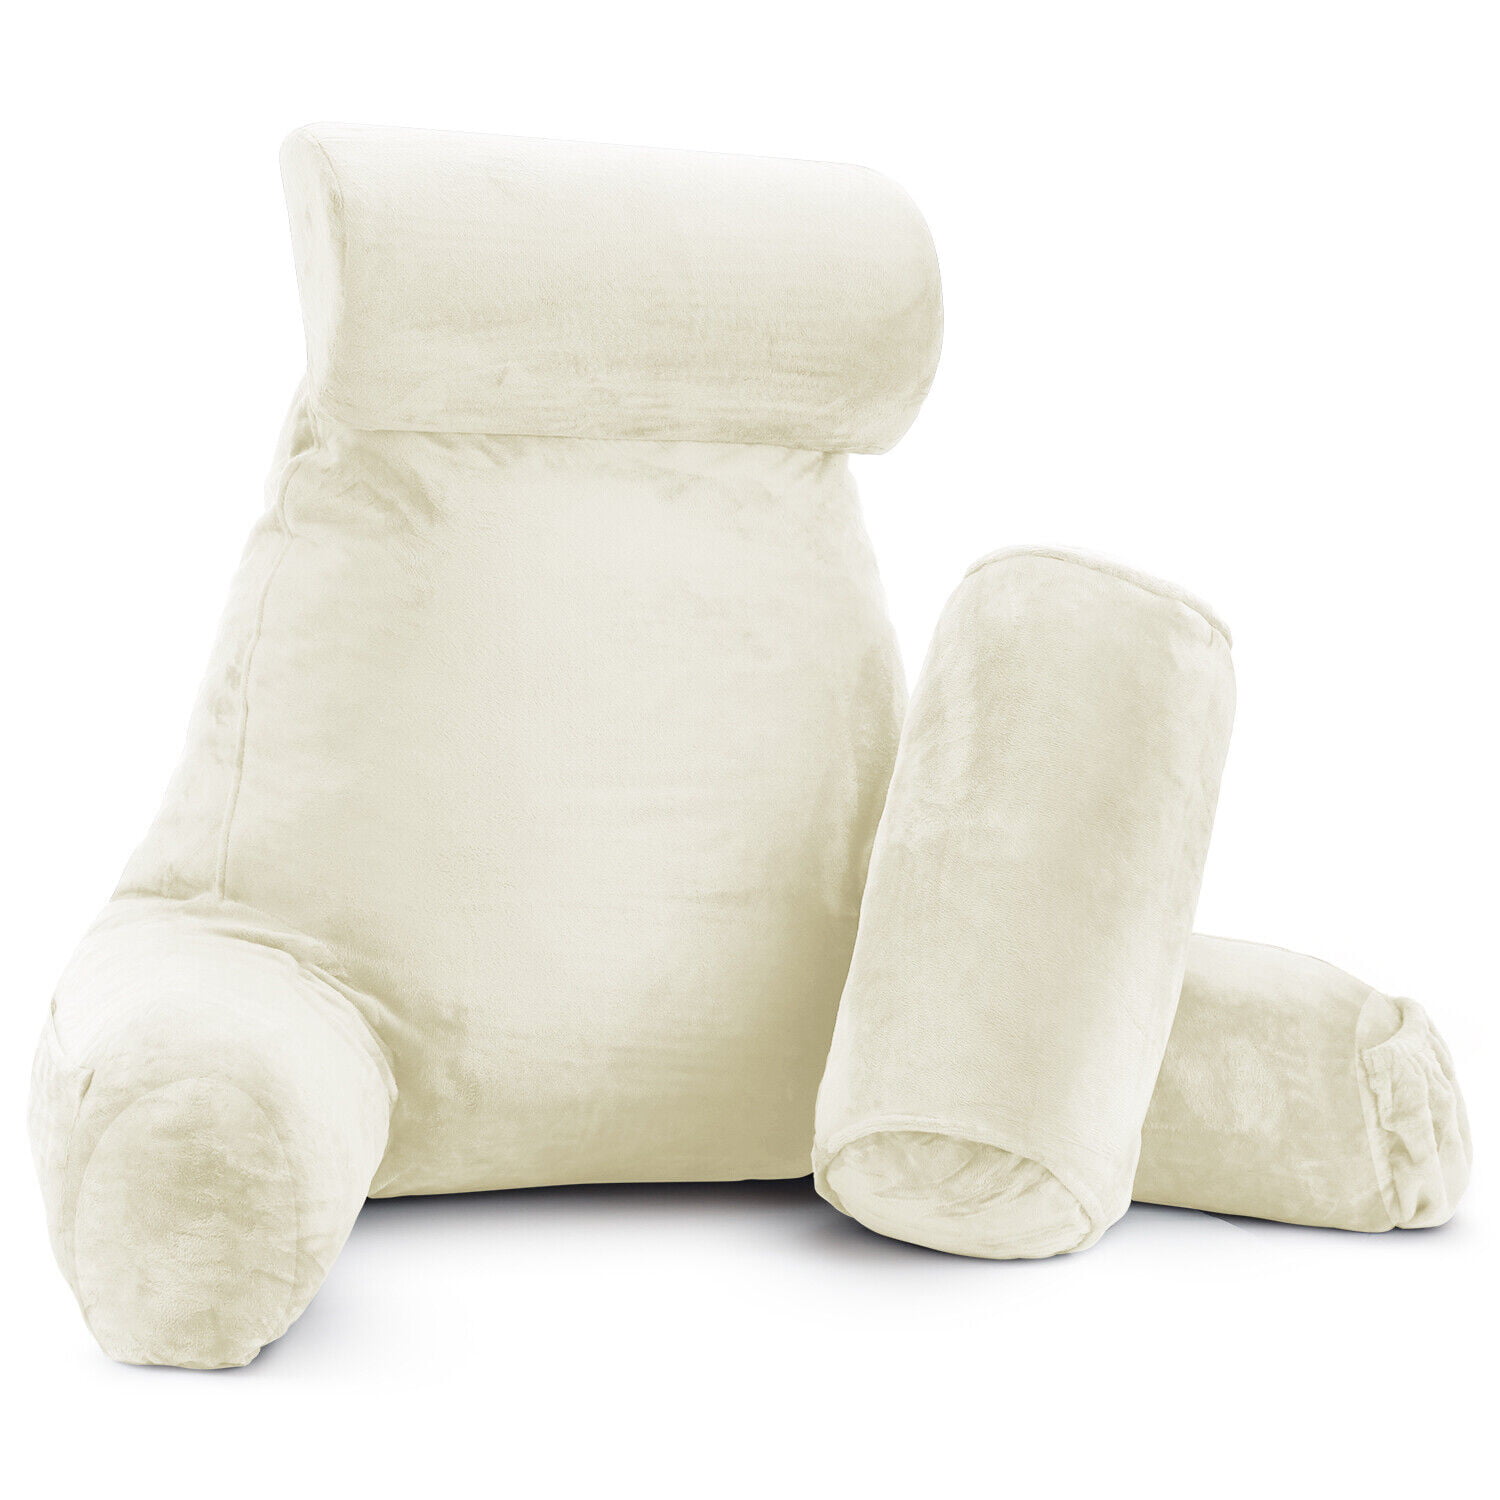 DMI 18 inch Molded Foam Ring Donut Seat Cushion Pillow